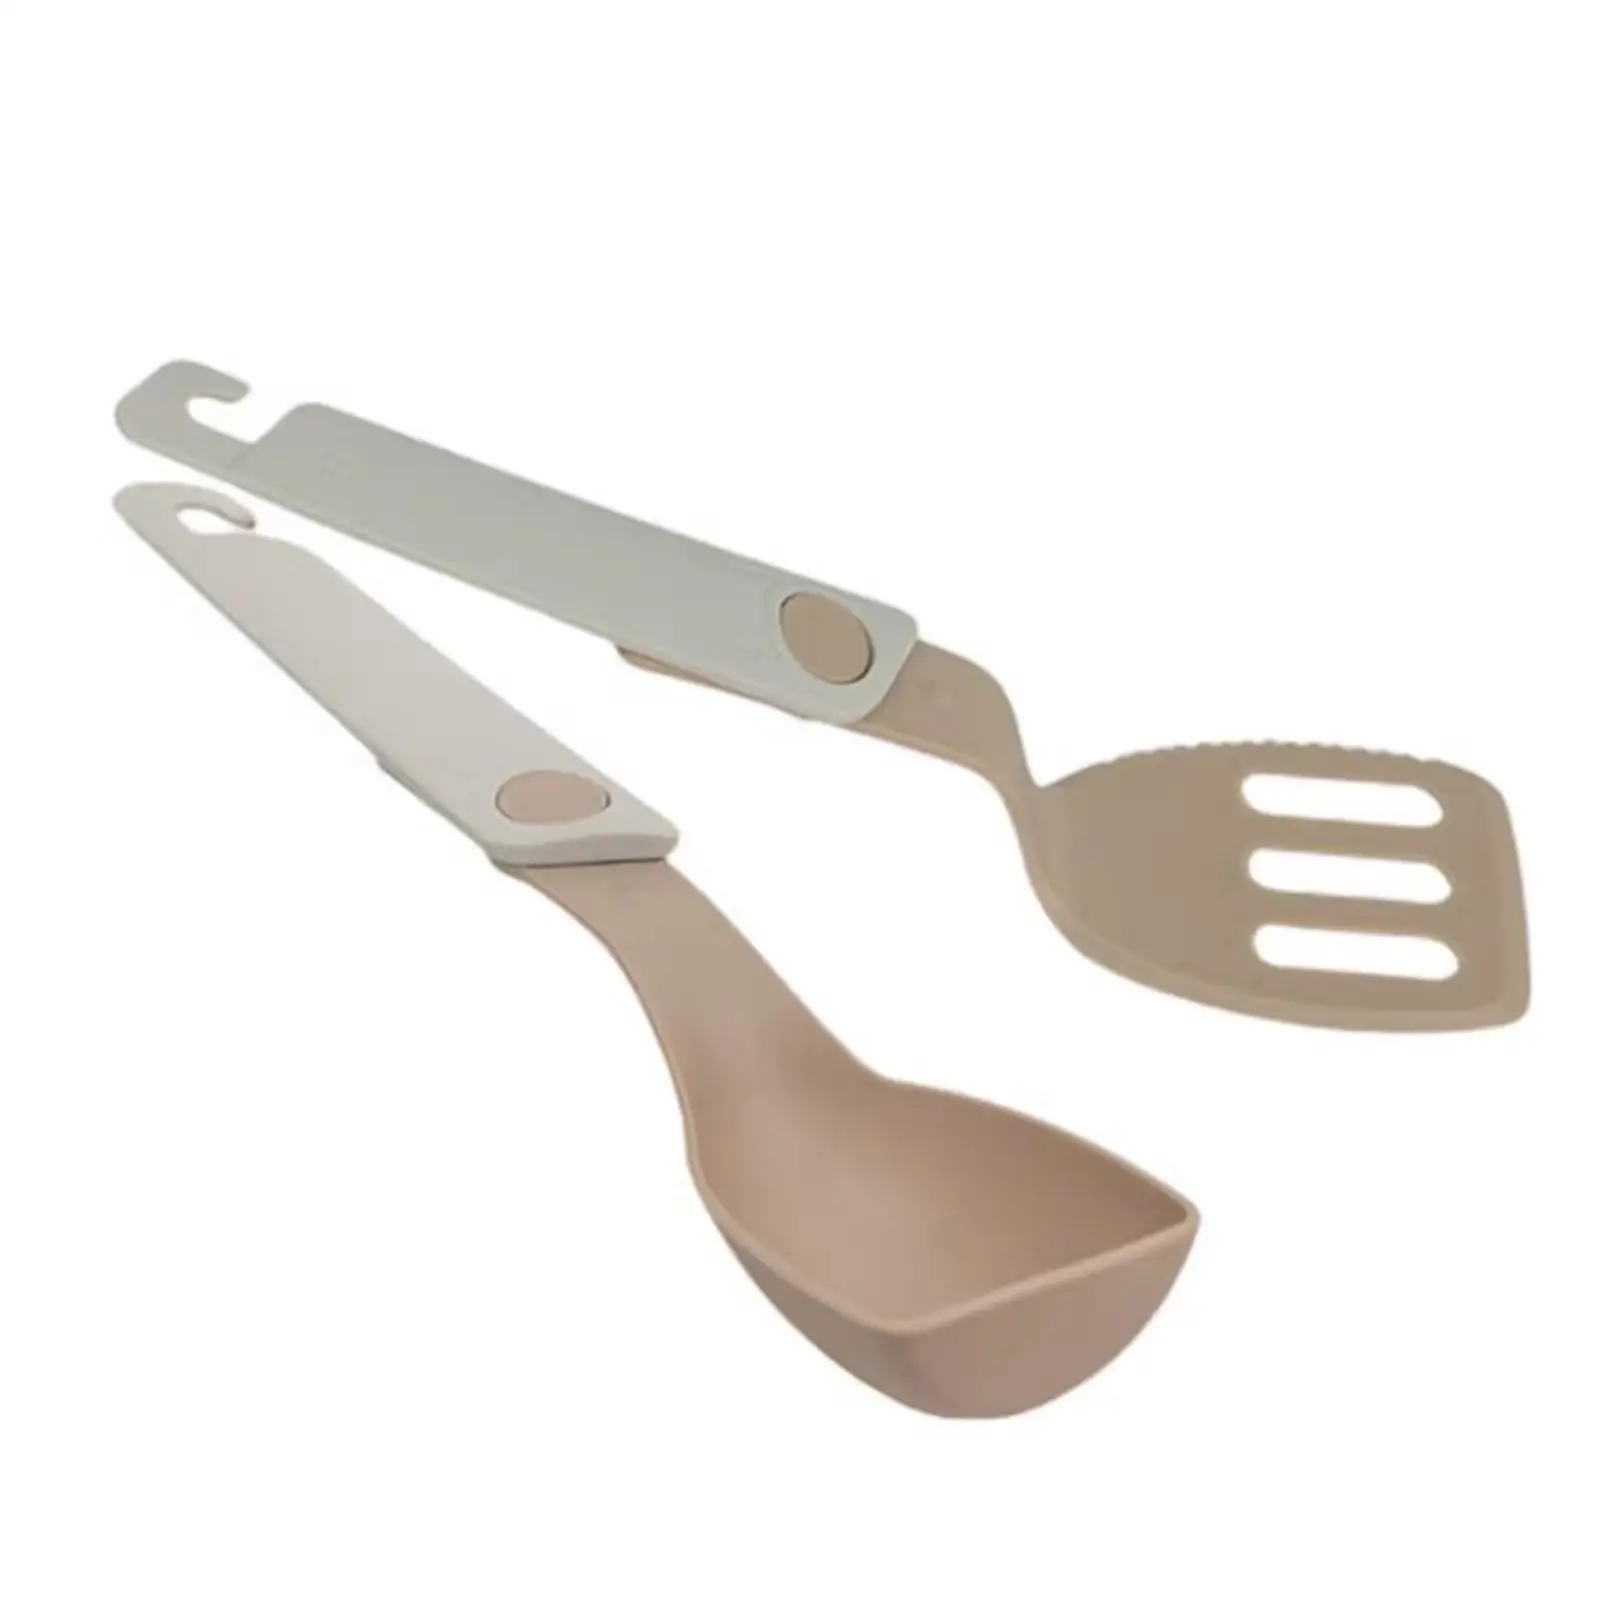 Camping Cutlery Folding Portable Reusable Outdoor Tableware Cookware Flatware